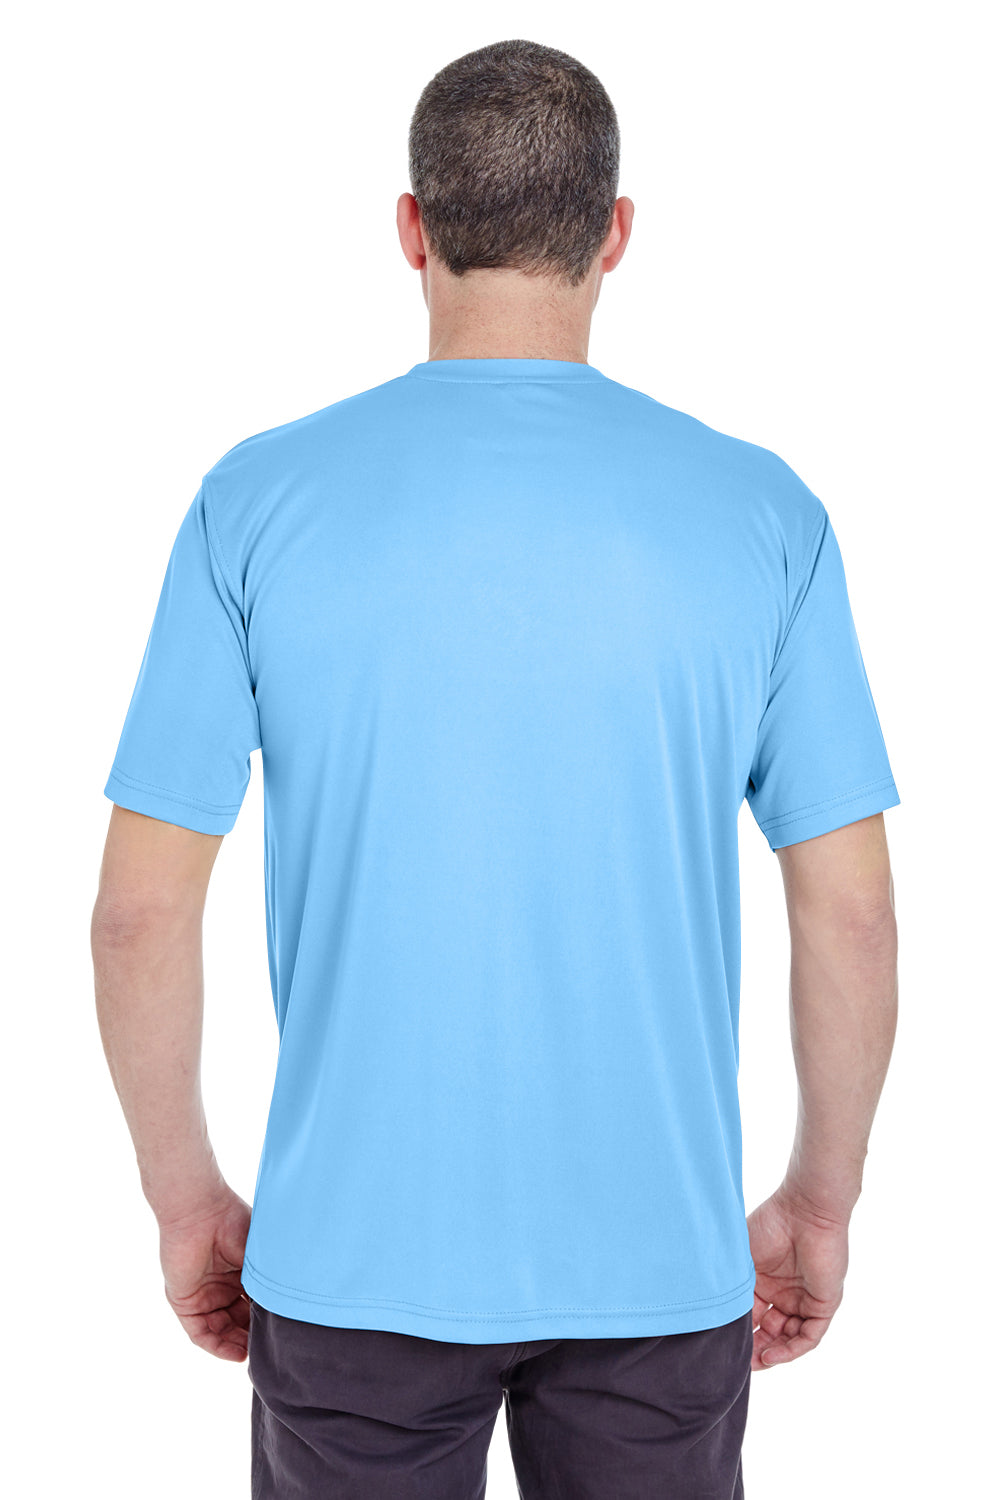 UltraClub 8620 Mens Cool & Dry Performance Moisture Wicking Short Sleeve Crewneck T-Shirt Columbia Blue Back